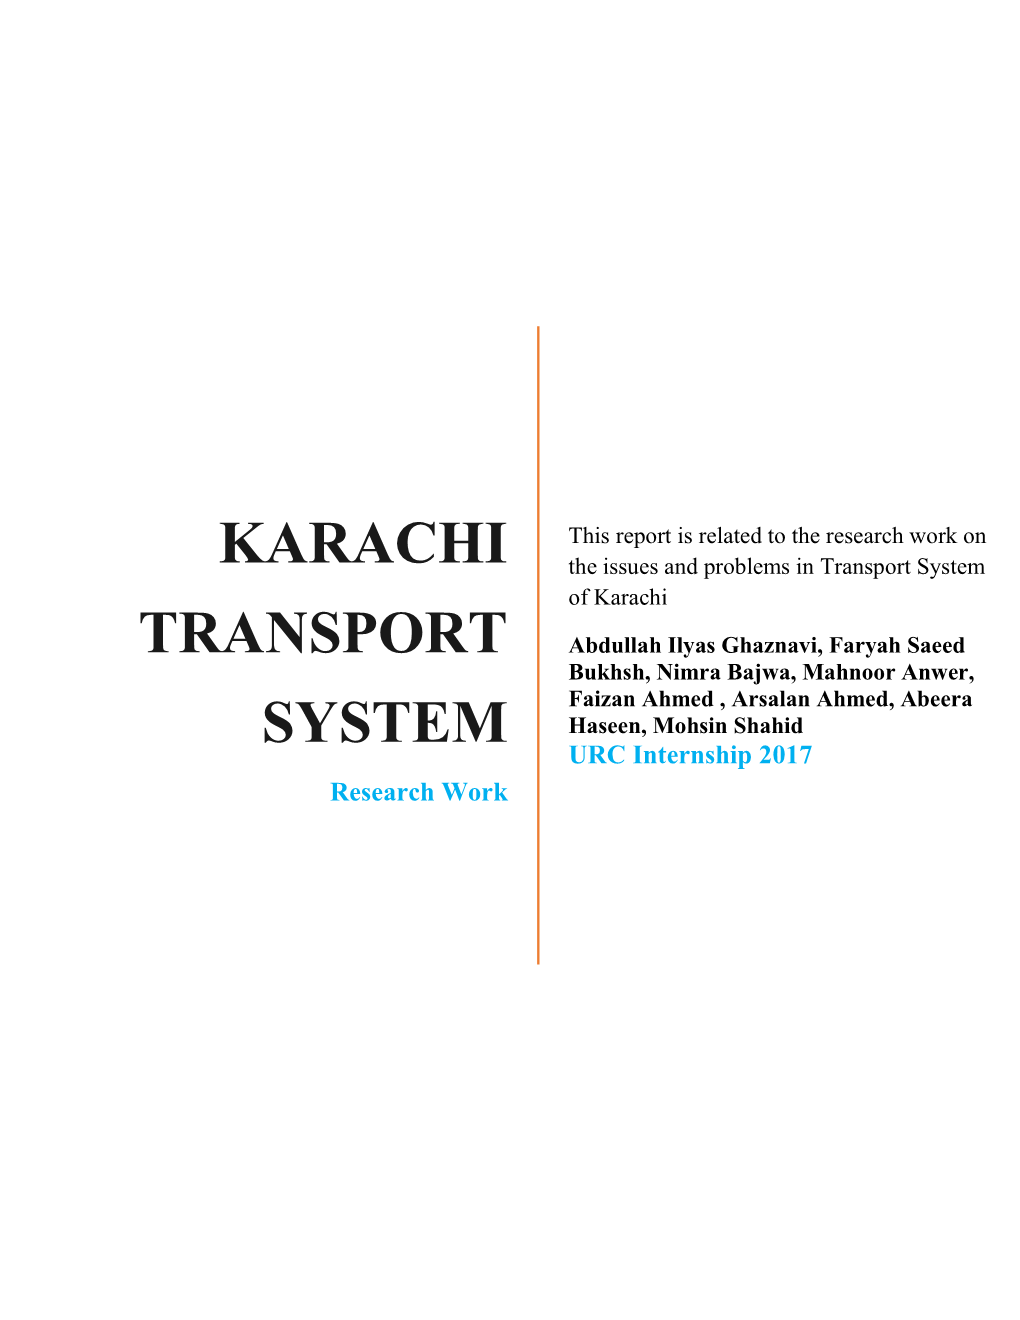 Karachi Transport System